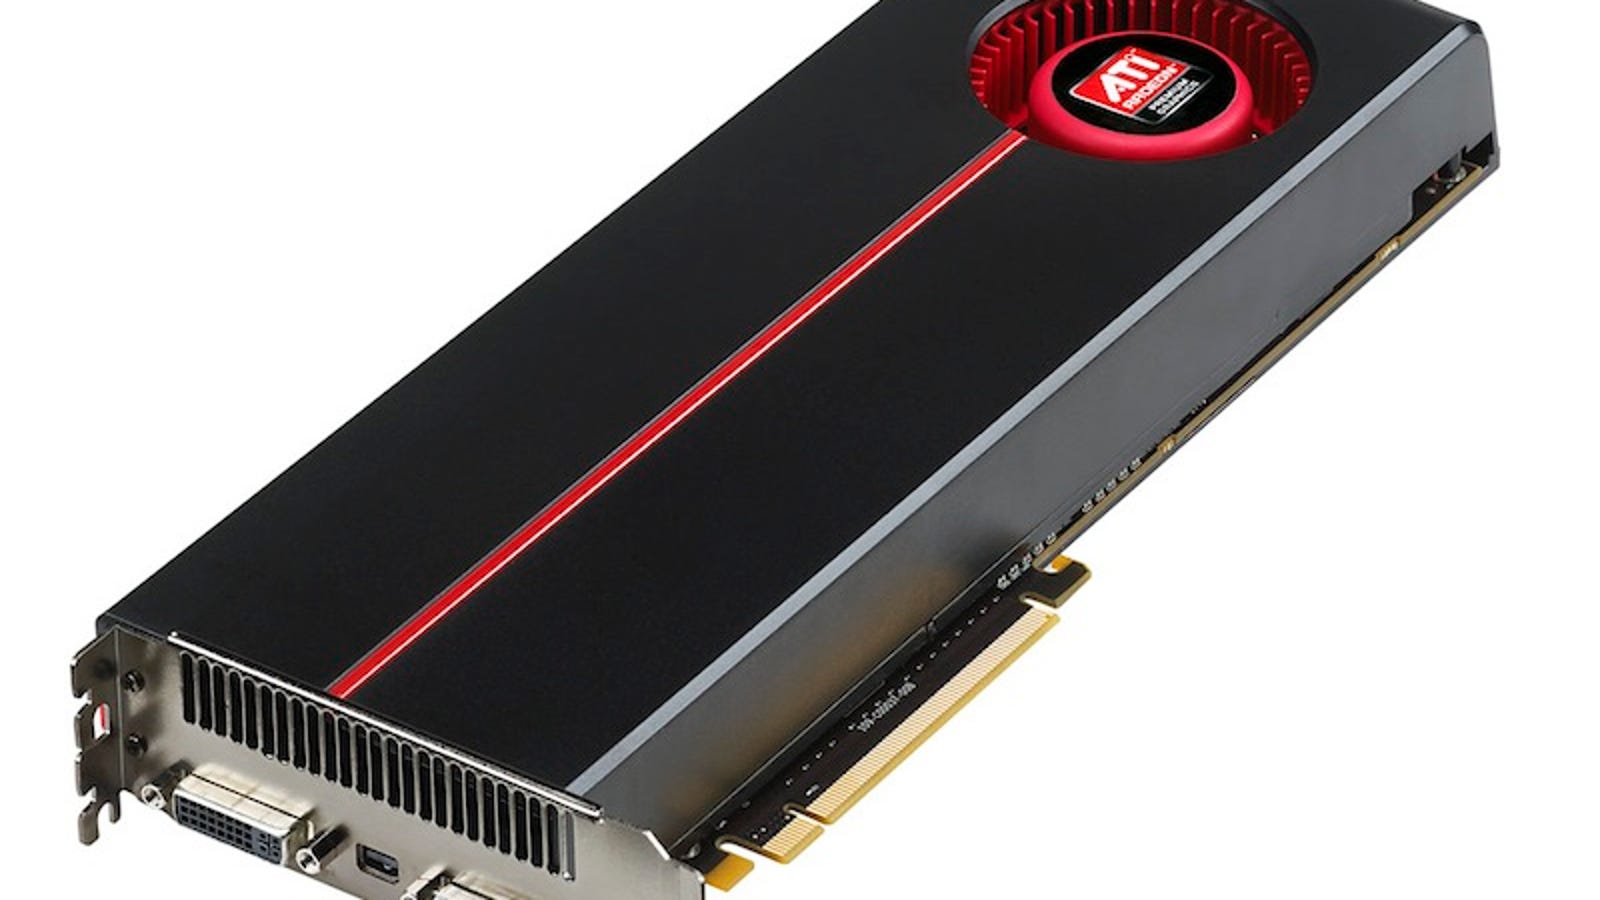 ATI Radeon HD 5970: The World's Fastest Graphics Card